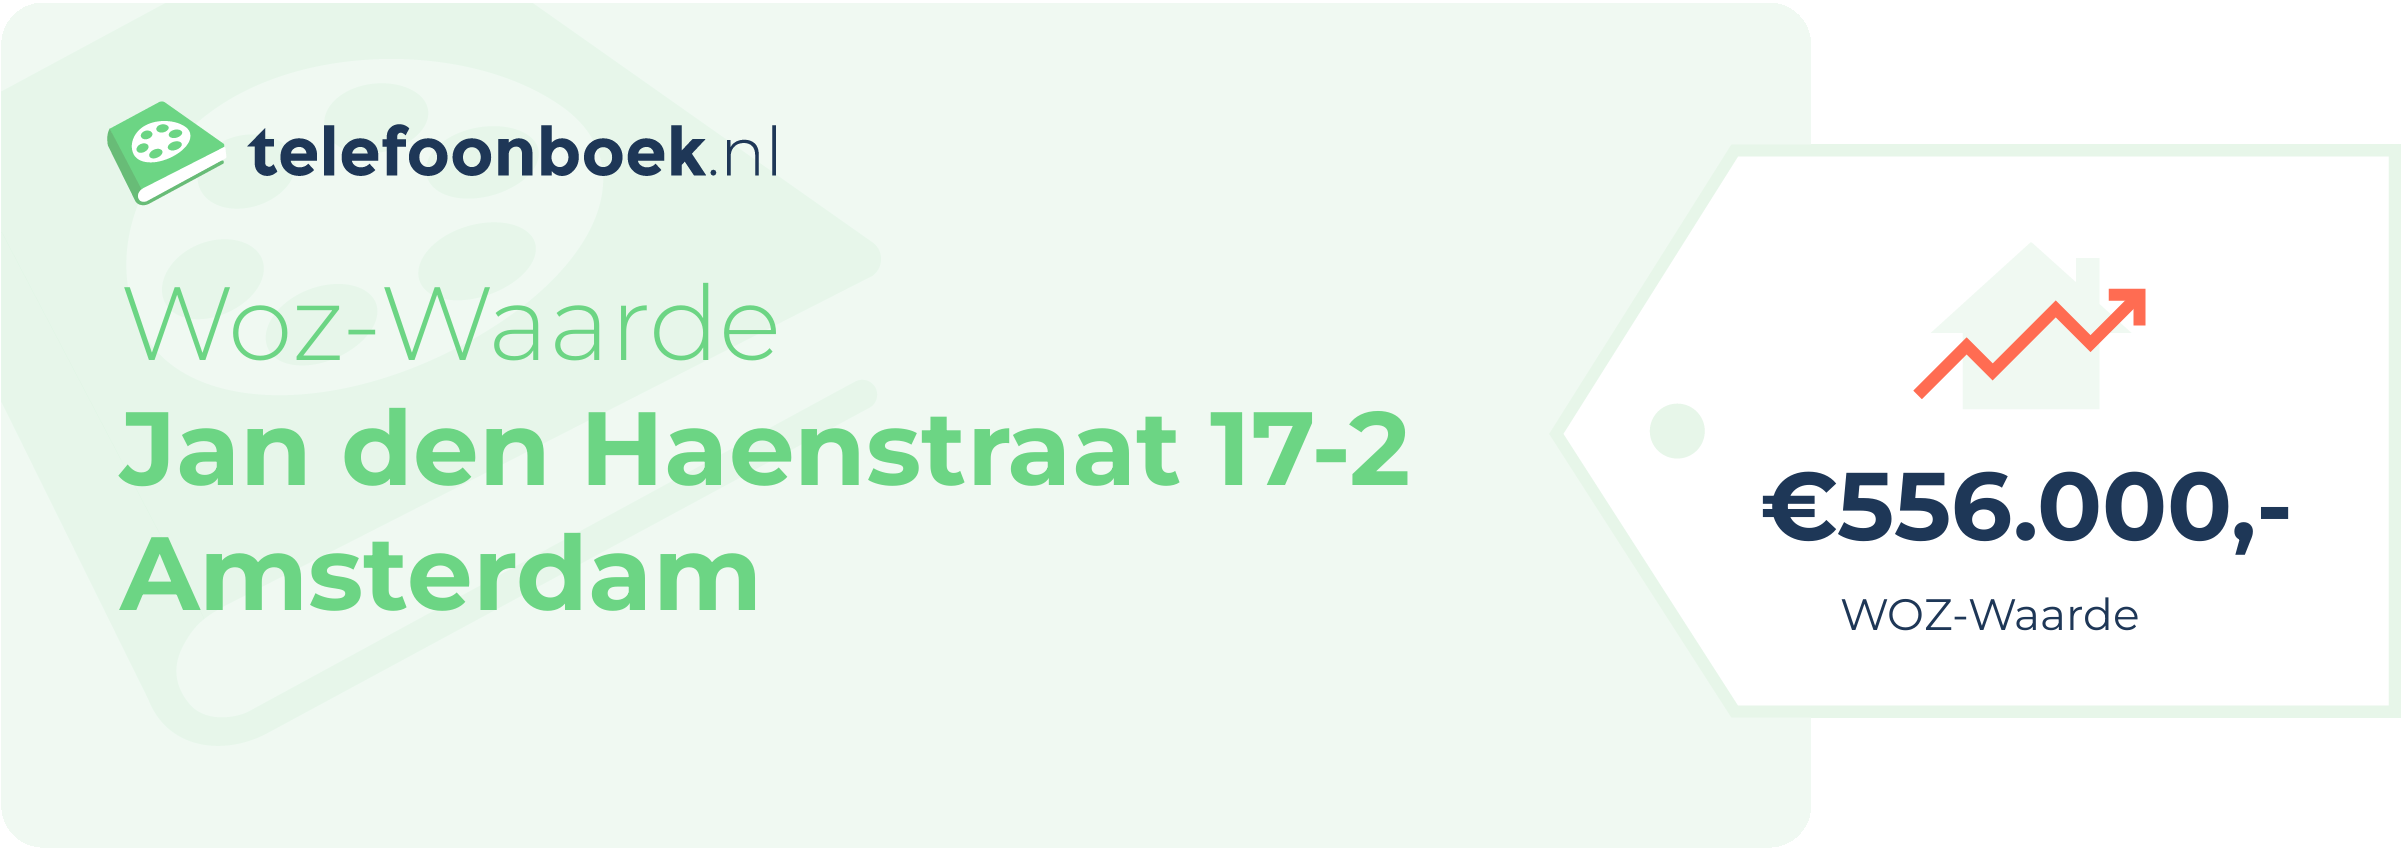 WOZ-waarde Jan Den Haenstraat 17-2 Amsterdam